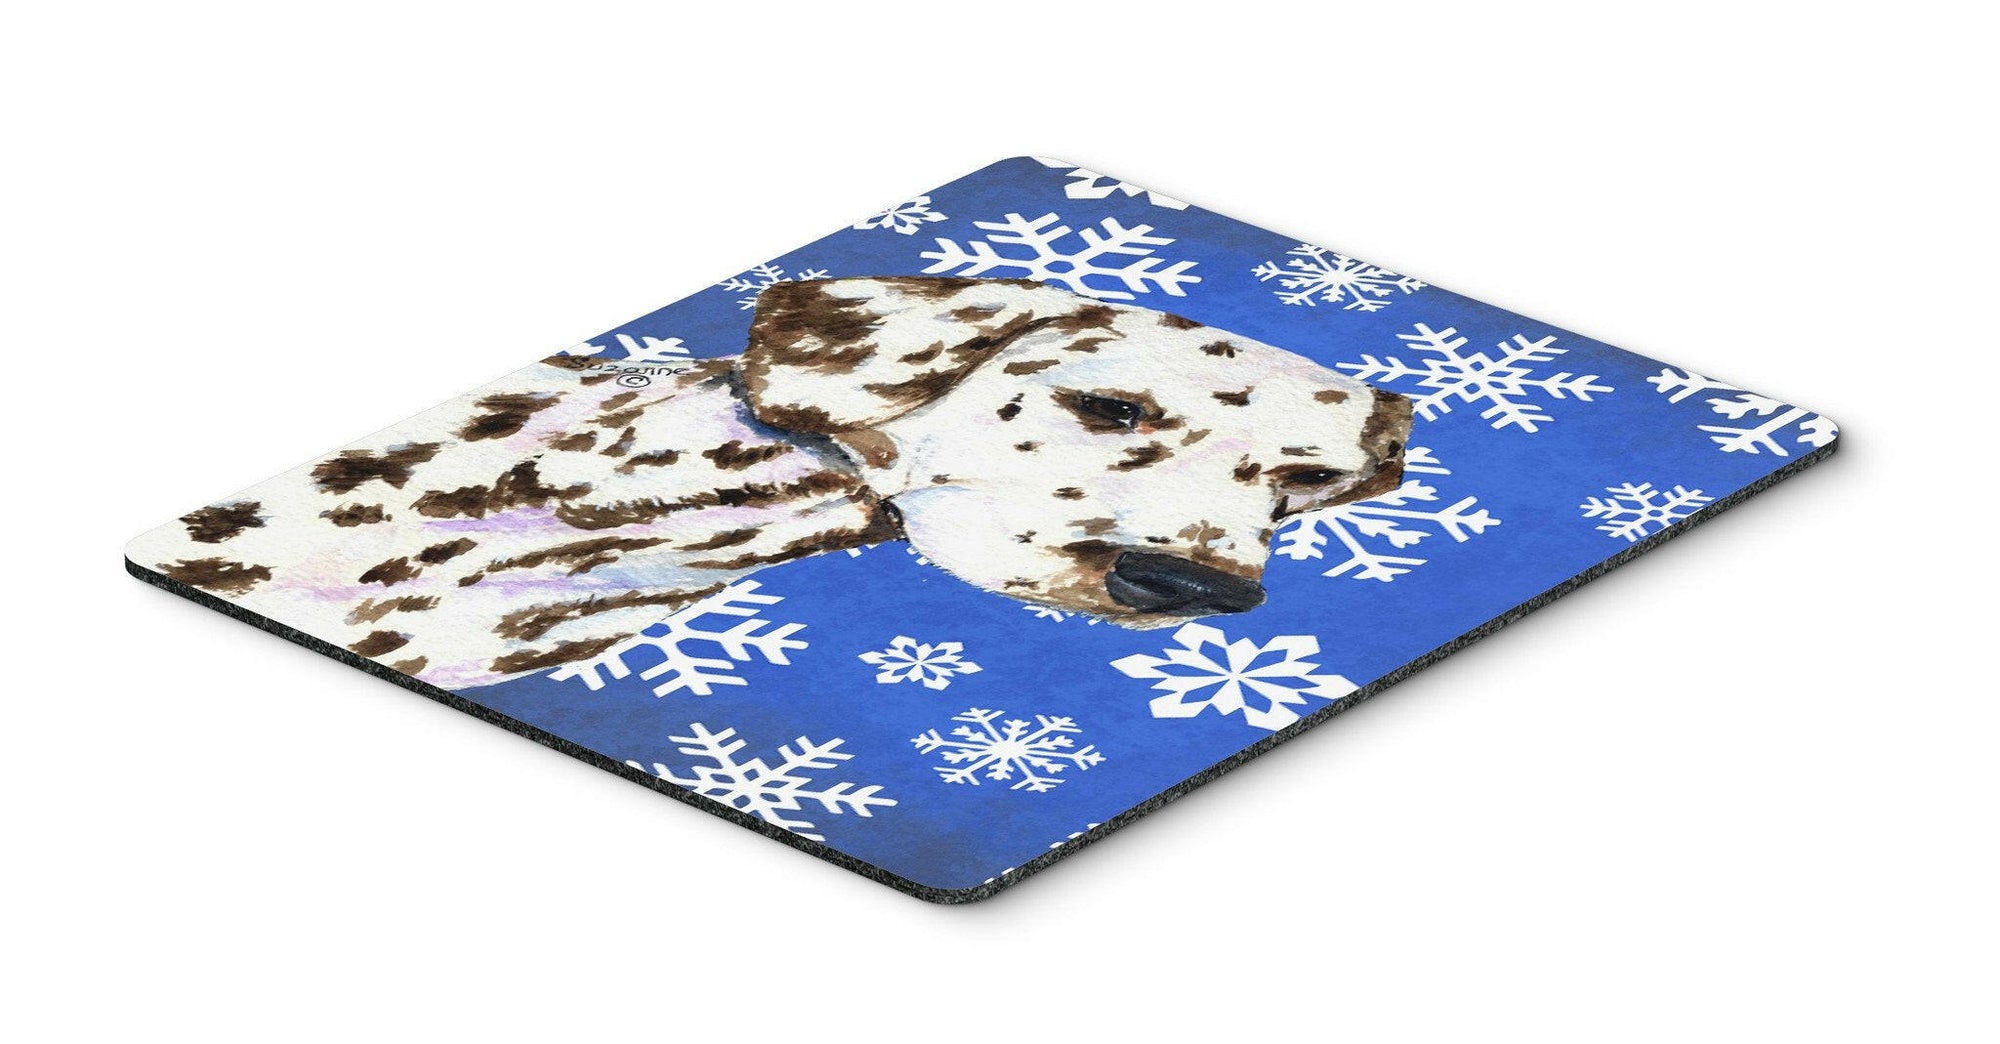 Dalmatian Winter Snowflakes Holiday Mouse Pad, Hot Pad or Trivet by Caroline's Treasures